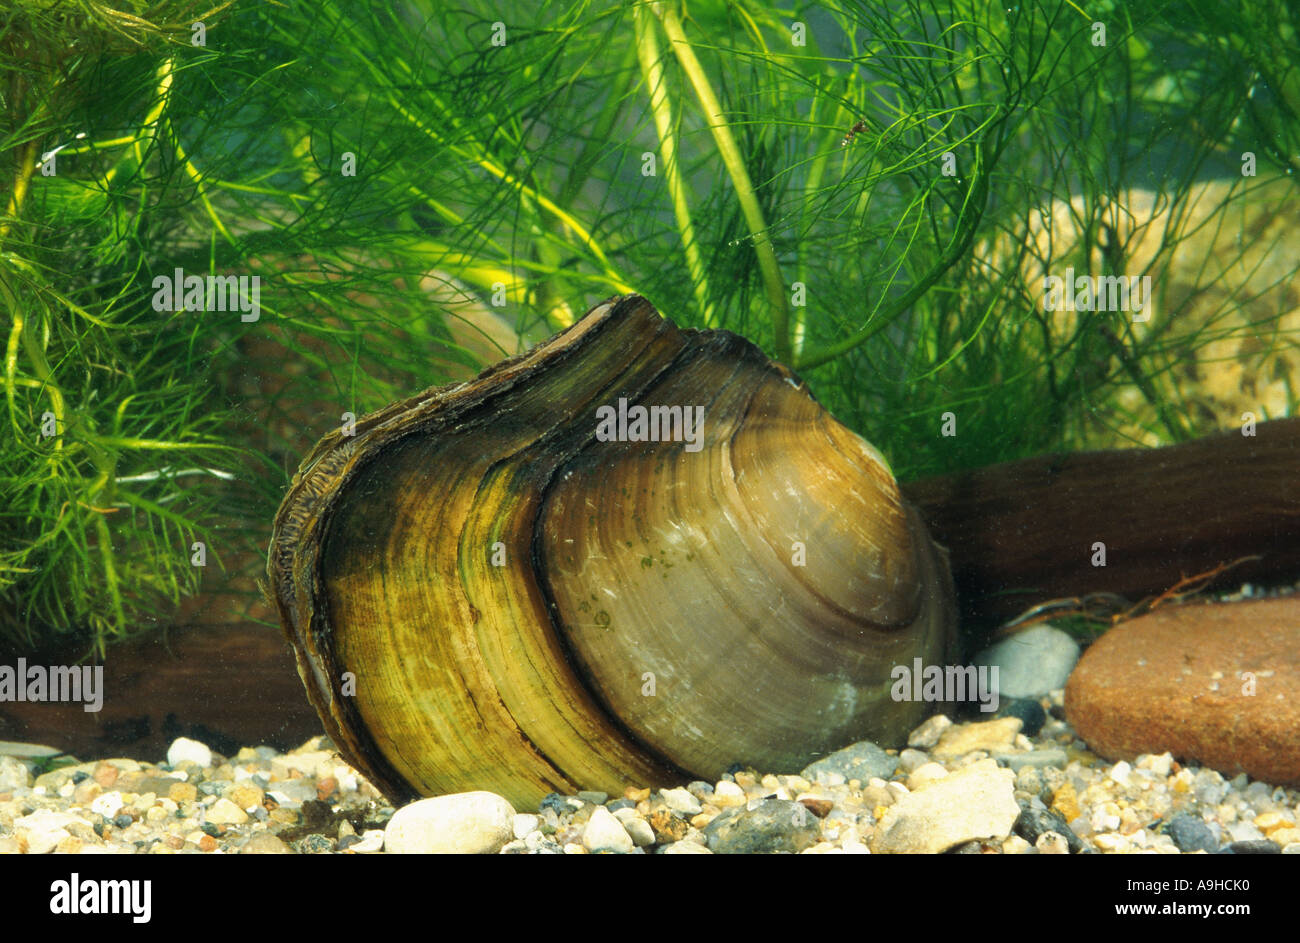 common pond mussel (Anodonta anodonta) Stock Photo